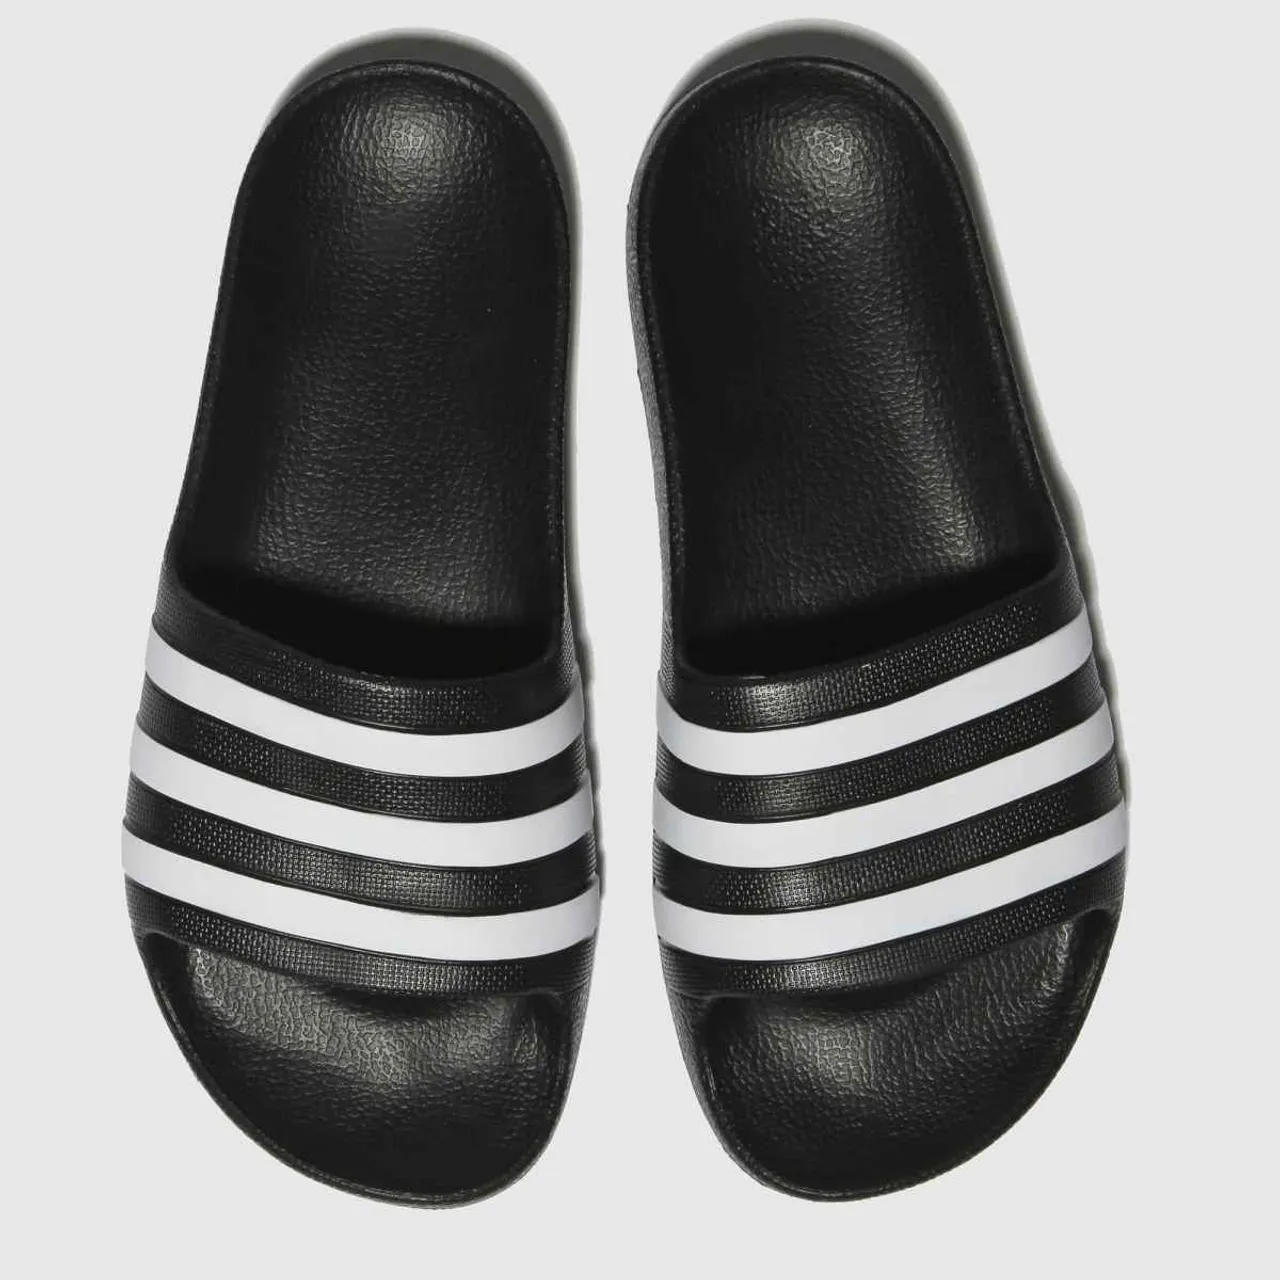 Adidas Black & White Adilette Aqua Youth Sandals